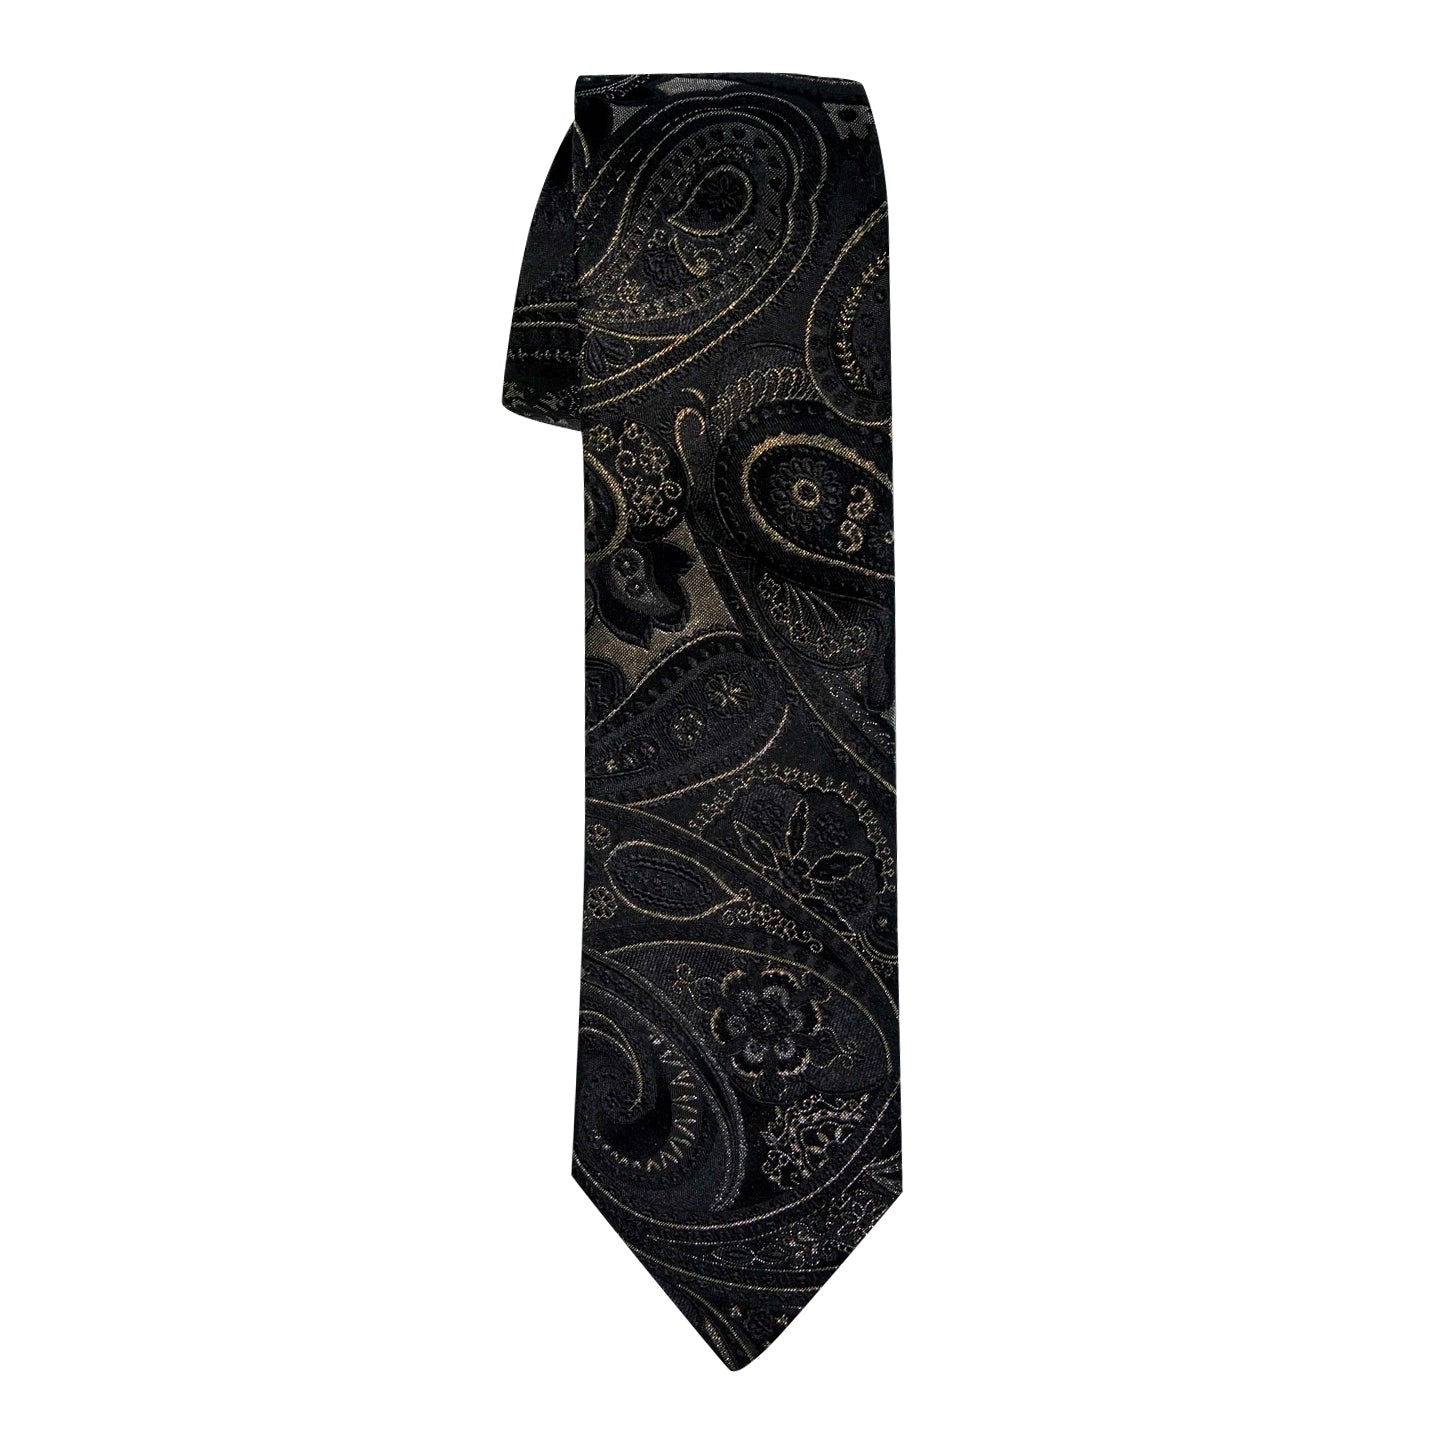 Venetian Paisley Tie in Black Oro Luxury Necktie